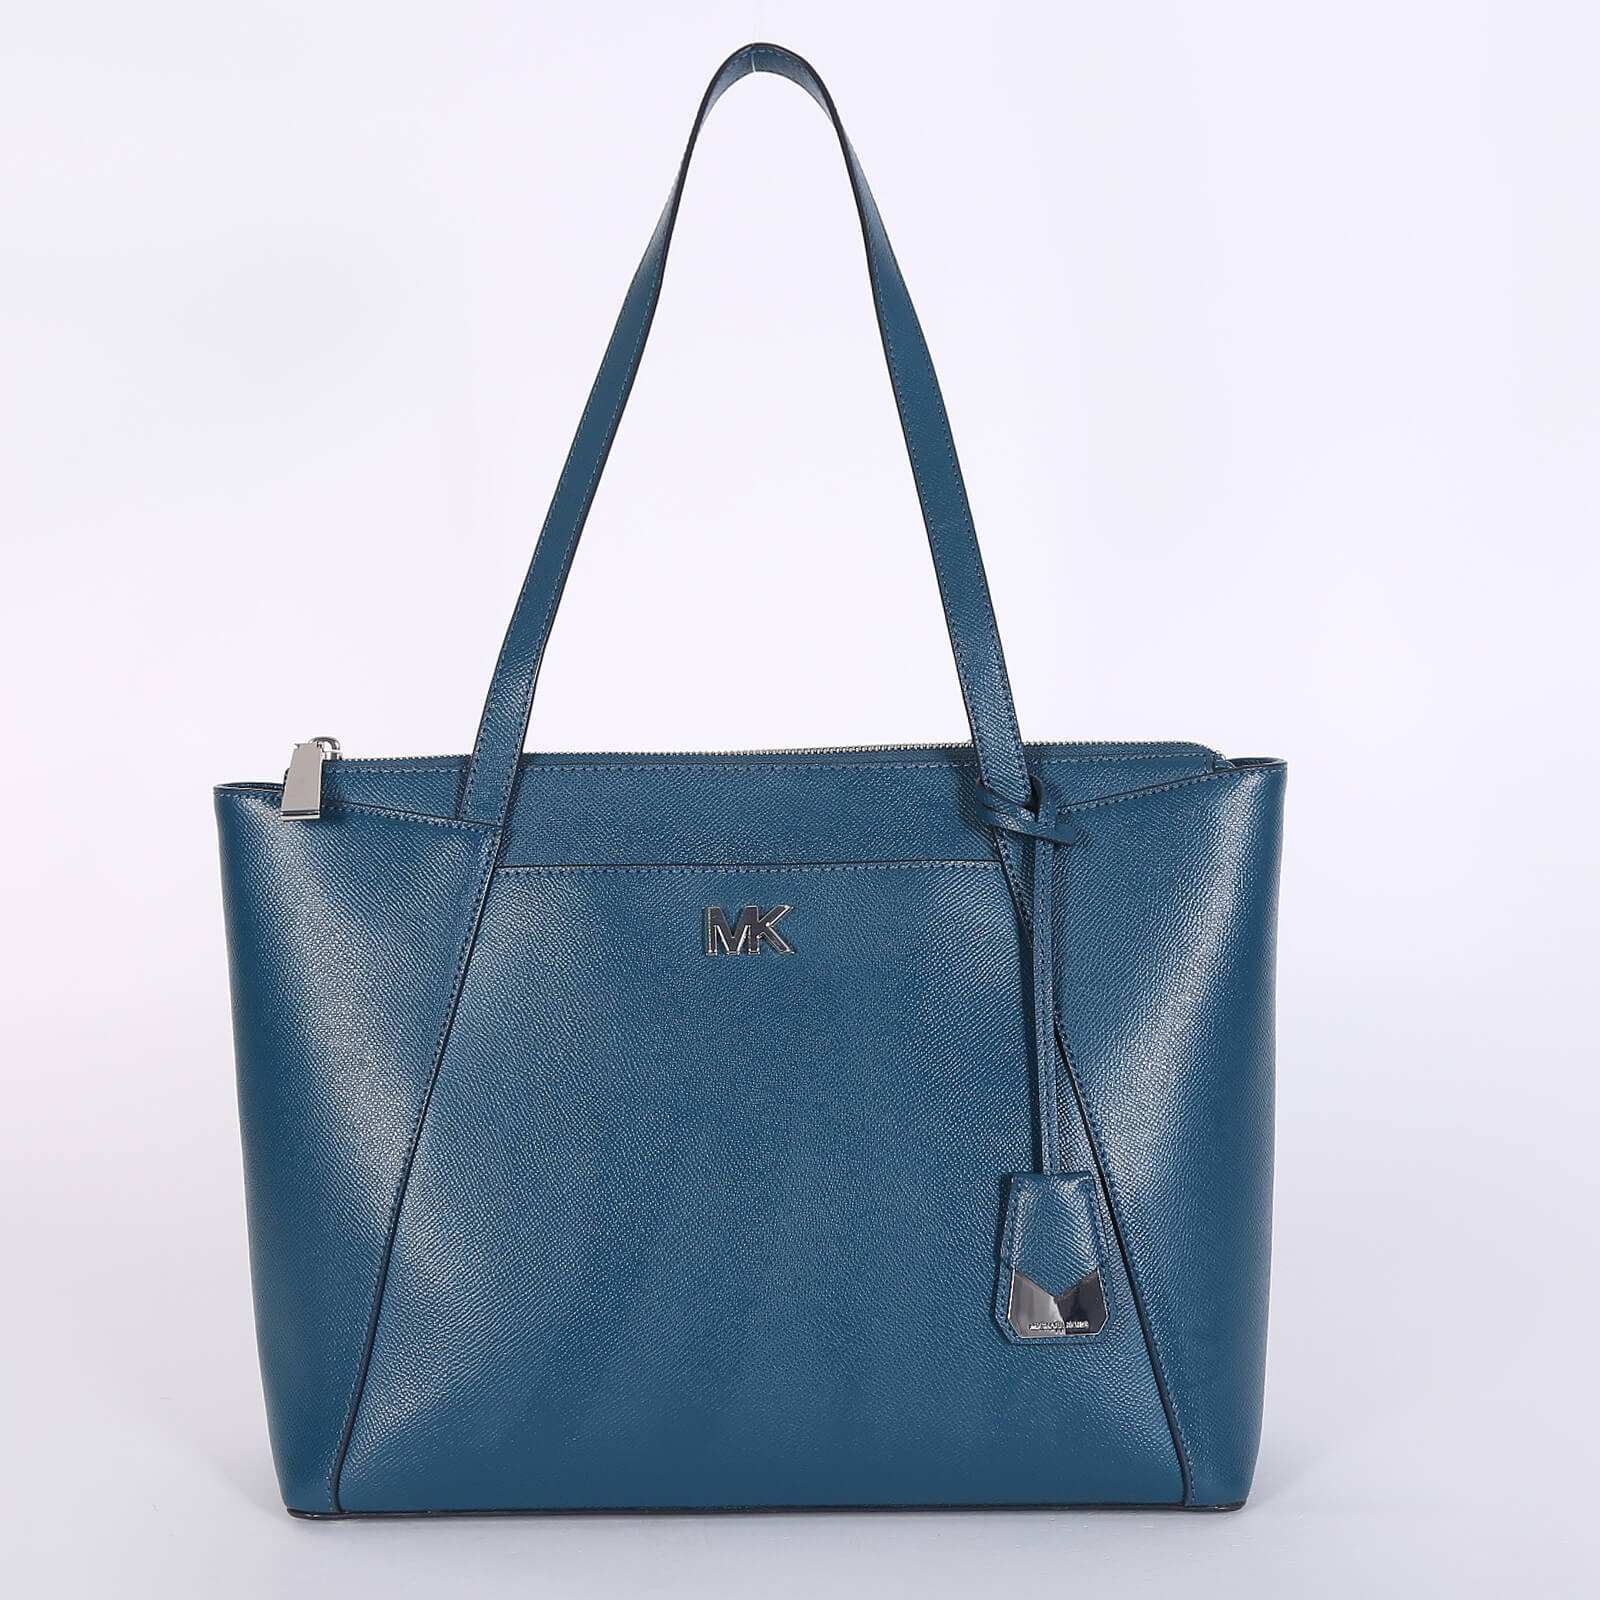  Michael Kors - Blues / Women's Tote Handbags / Women's